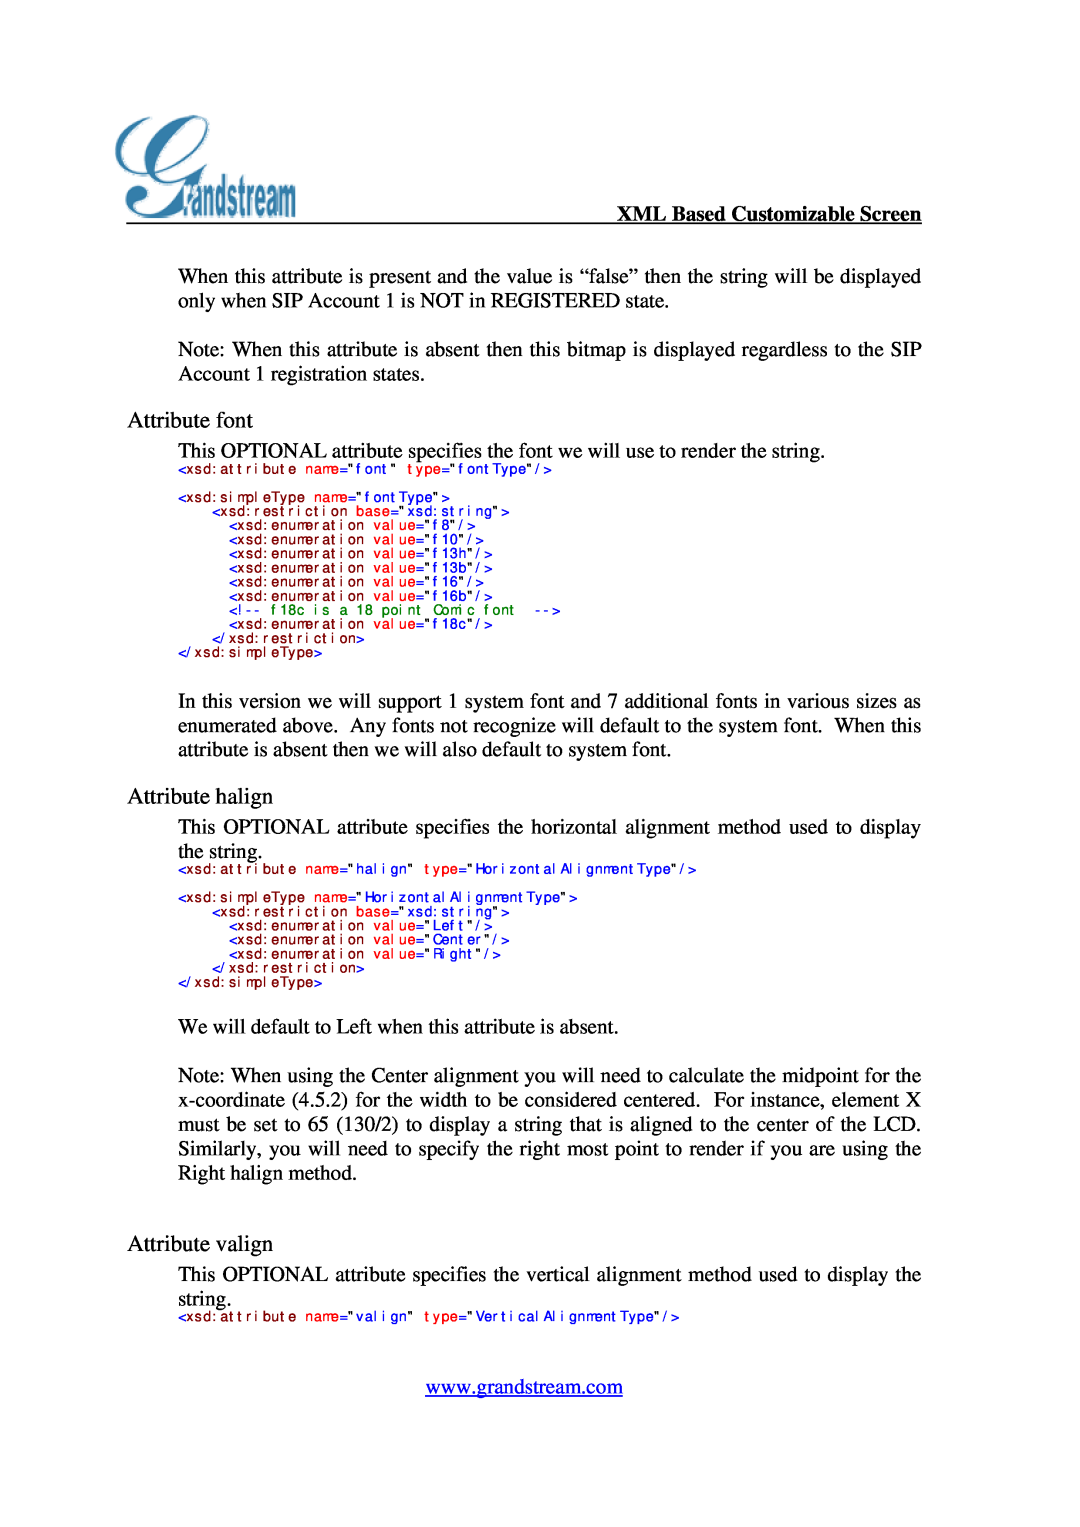 Grandstream Networks GXP-2000 manual Attribute font, Attribute halign, Attribute valign, XML Based Customizable Screen 